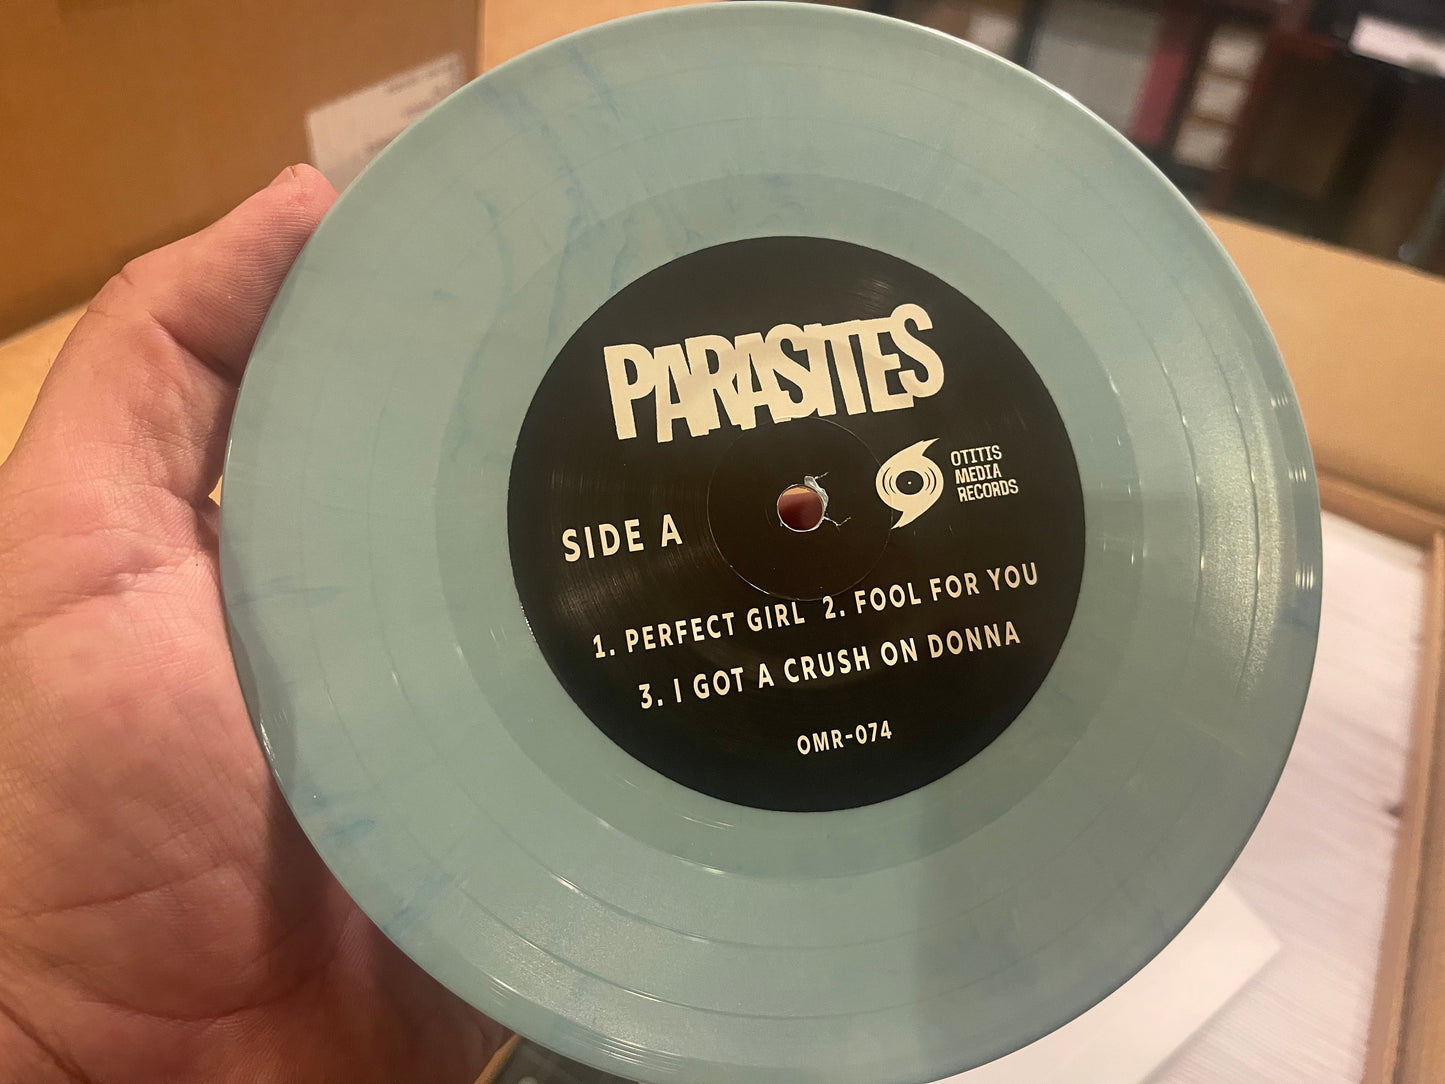 OMR-074 PARASITES “EP-onymous” 7 inch Vinyl (Random Colored)